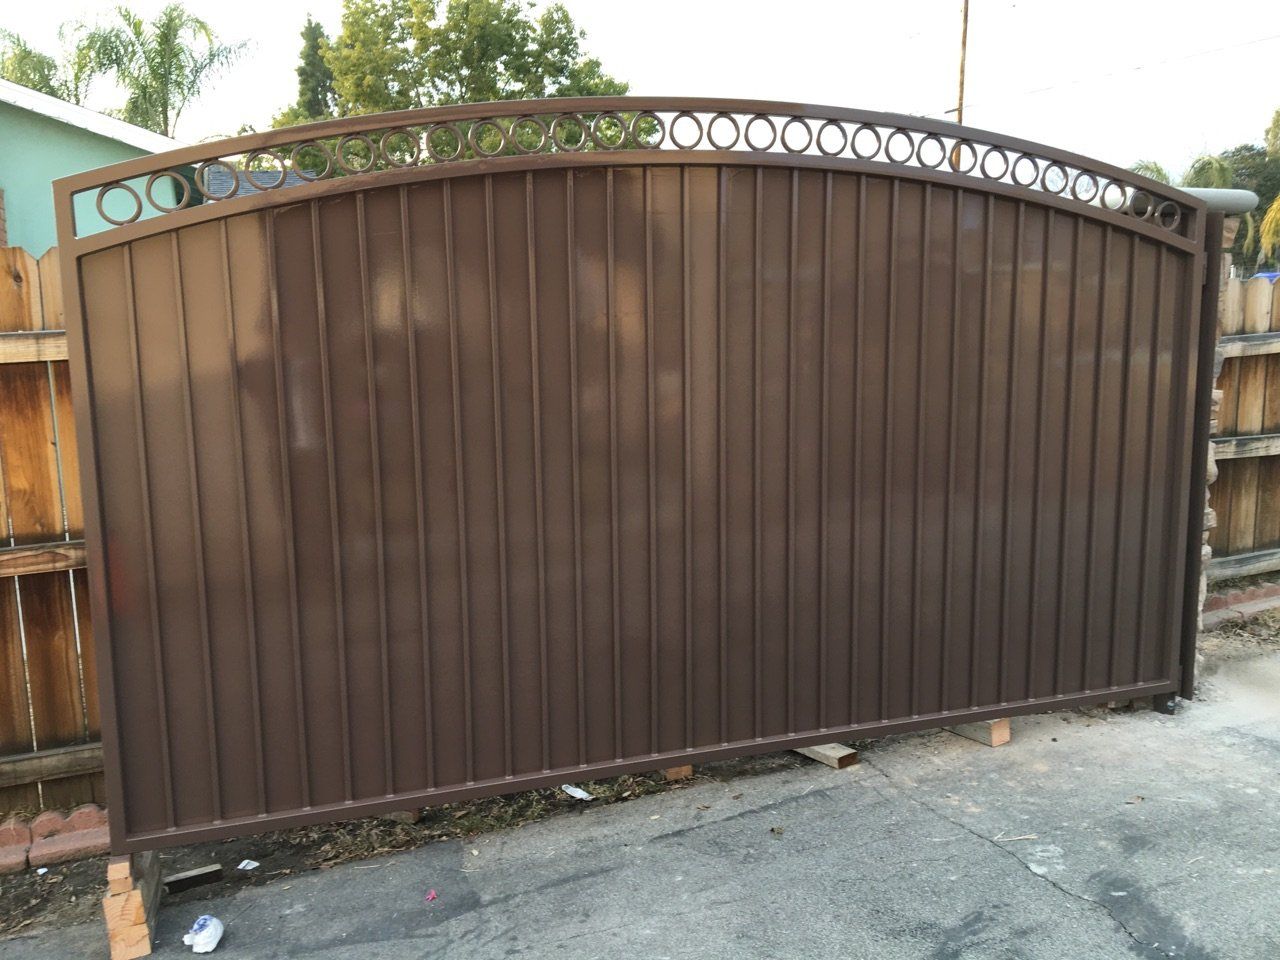 Exit, Entry Gate - Rocky's Fencing - Garden Grove CA